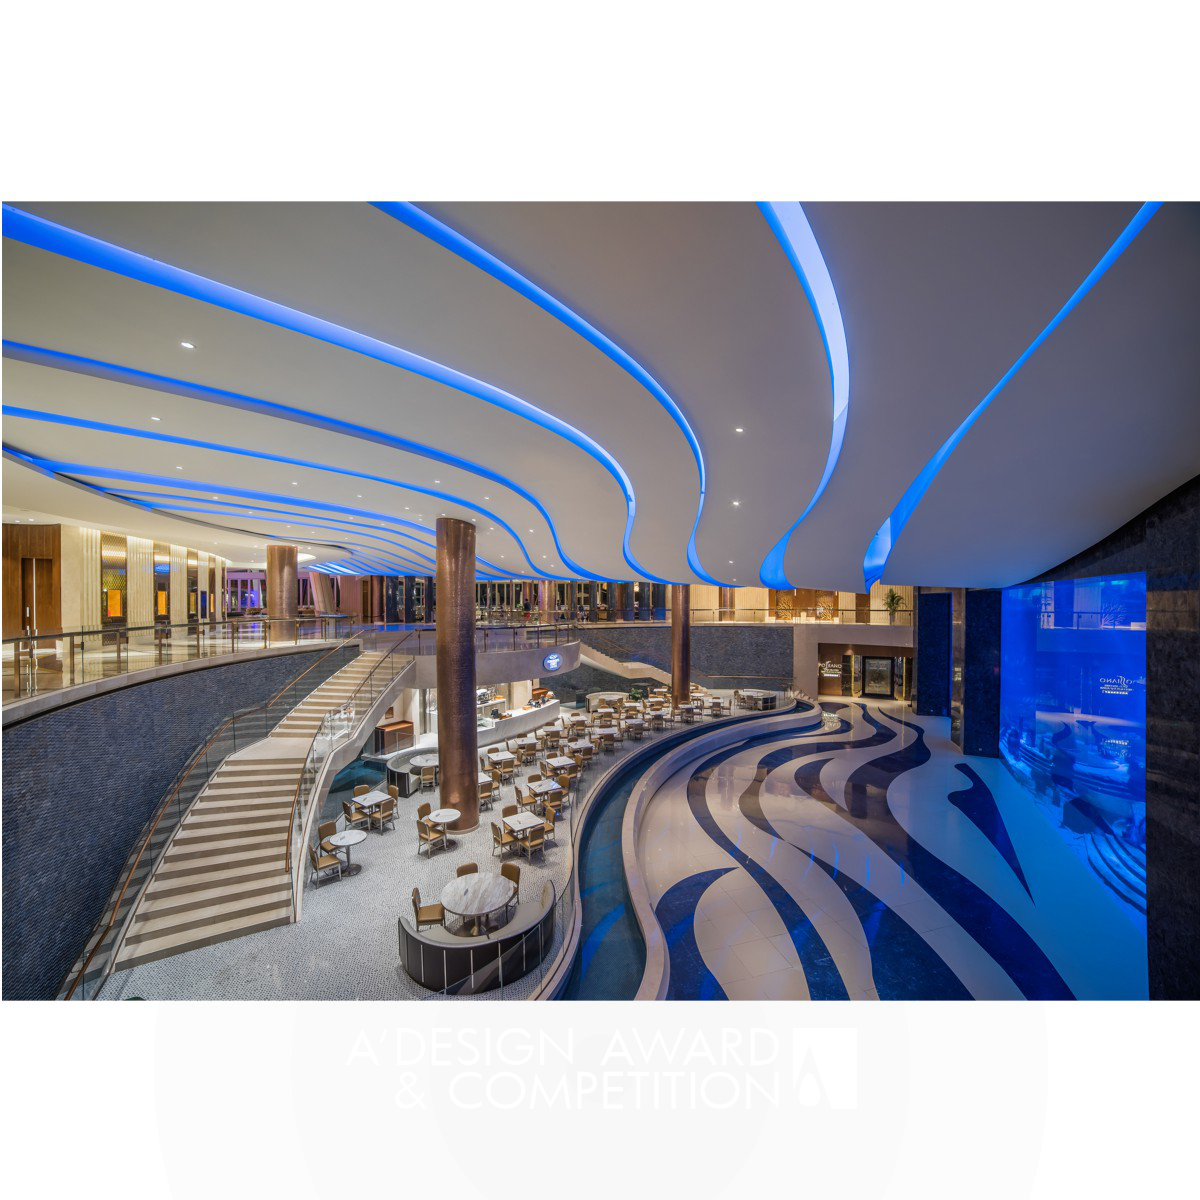 Atlantis Sanya Resort by ATG/Asiantime International Construction